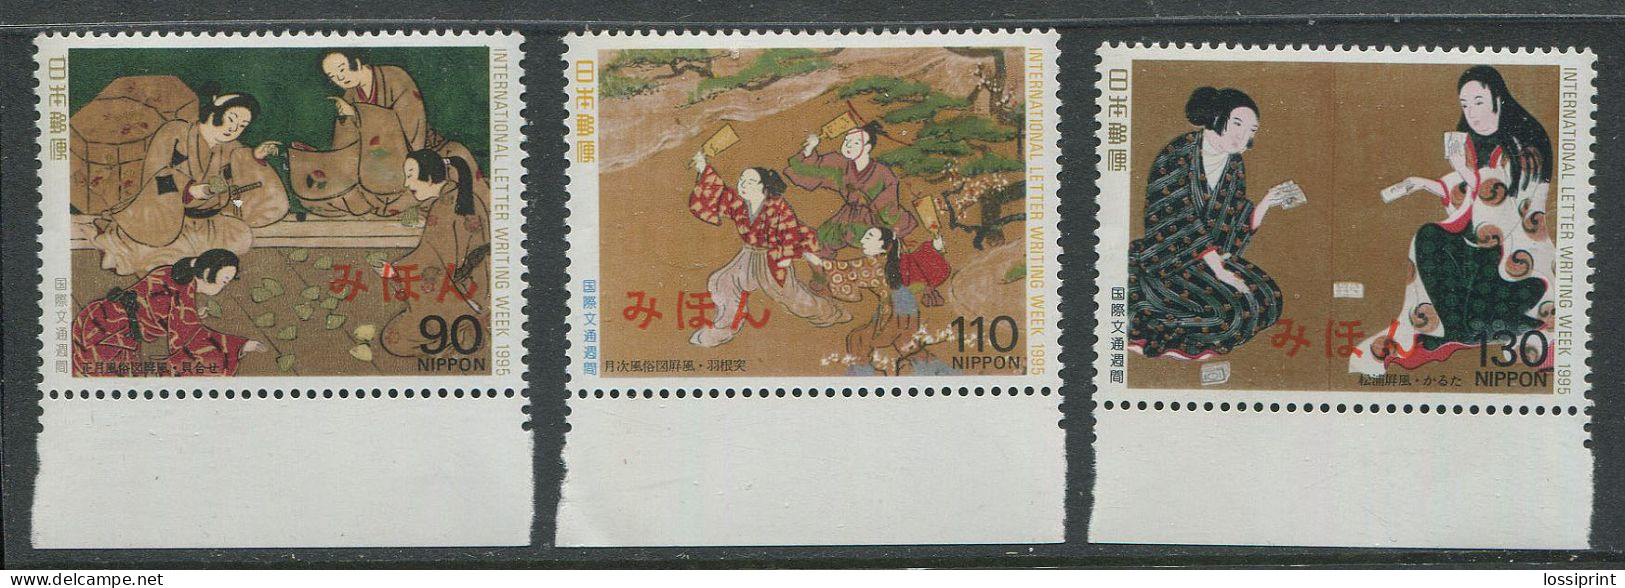 Japan:Unused Stamps Serie International Letter Writing Week, 1995, MNH - Neufs